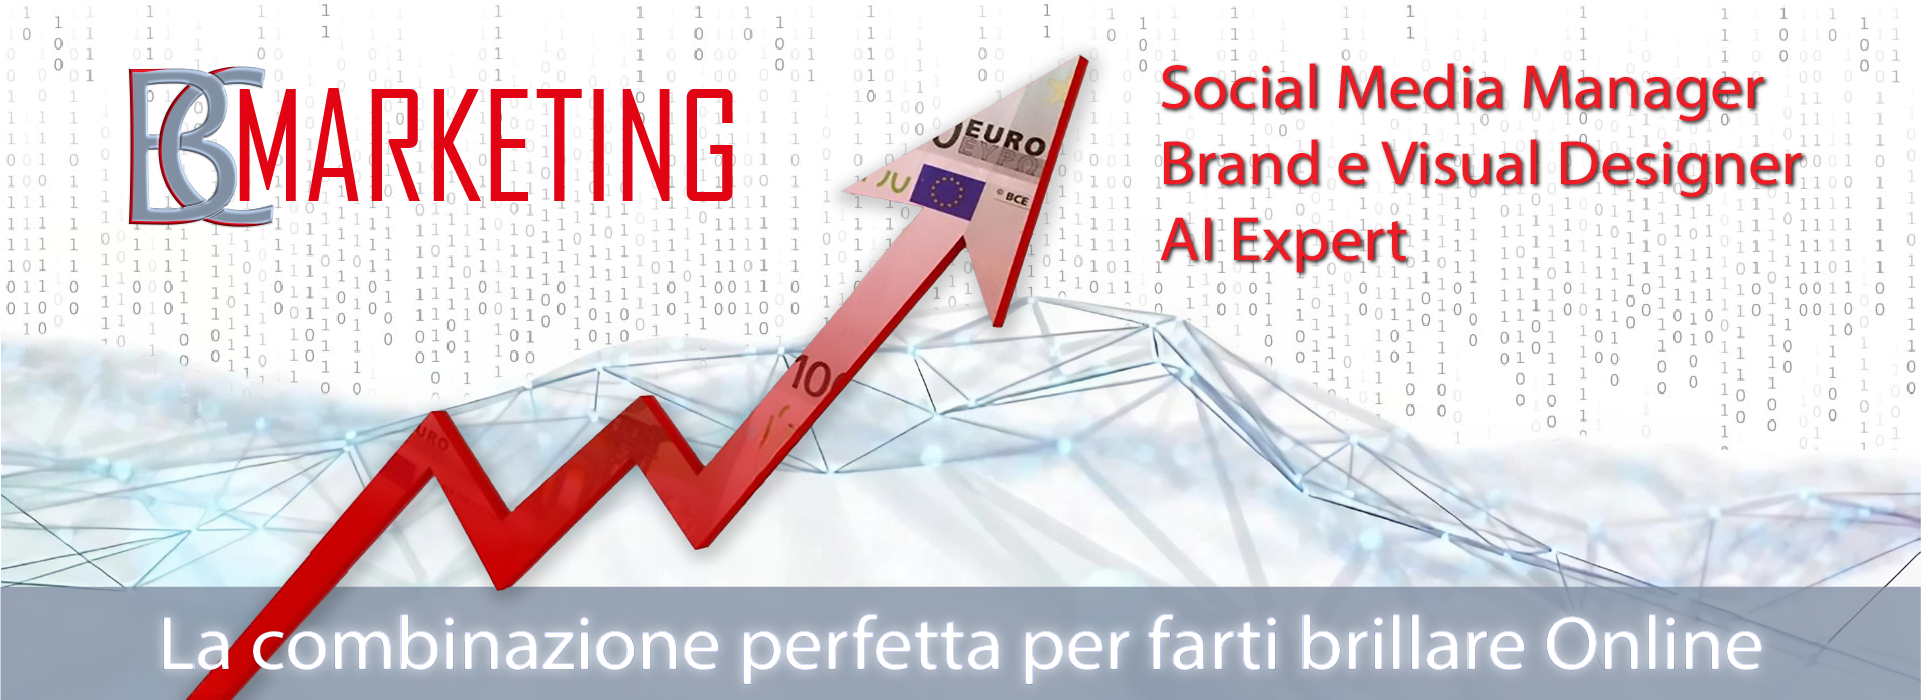 AI Expert - Social Media Manager - Brand e Visual Designer - BC Marketing - Banner Home Page